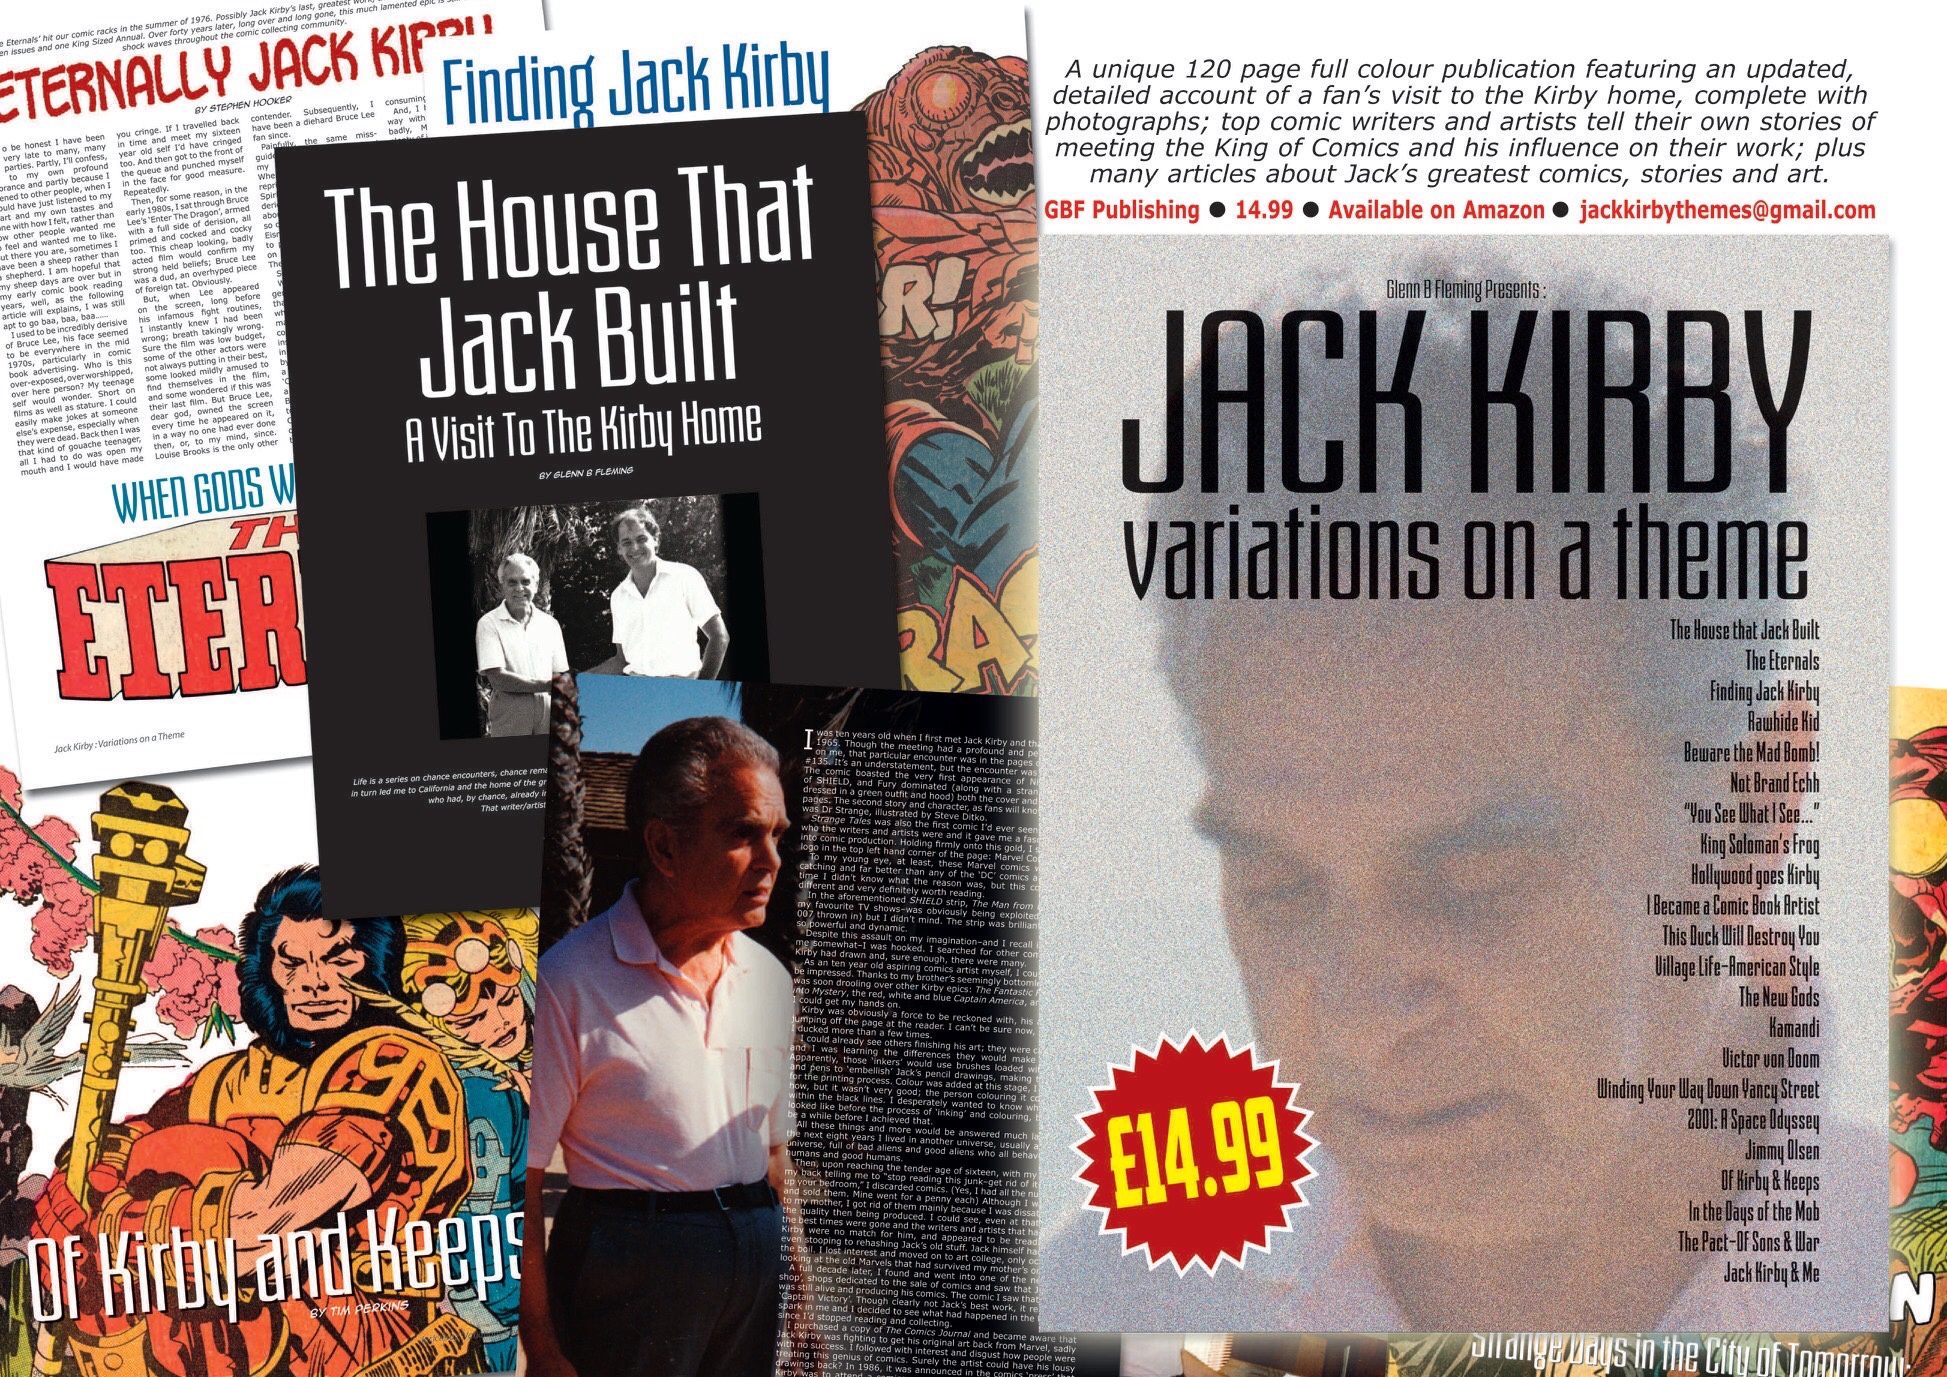 Jack Kirby: Variations on a Theme by Glenn B. Fleming